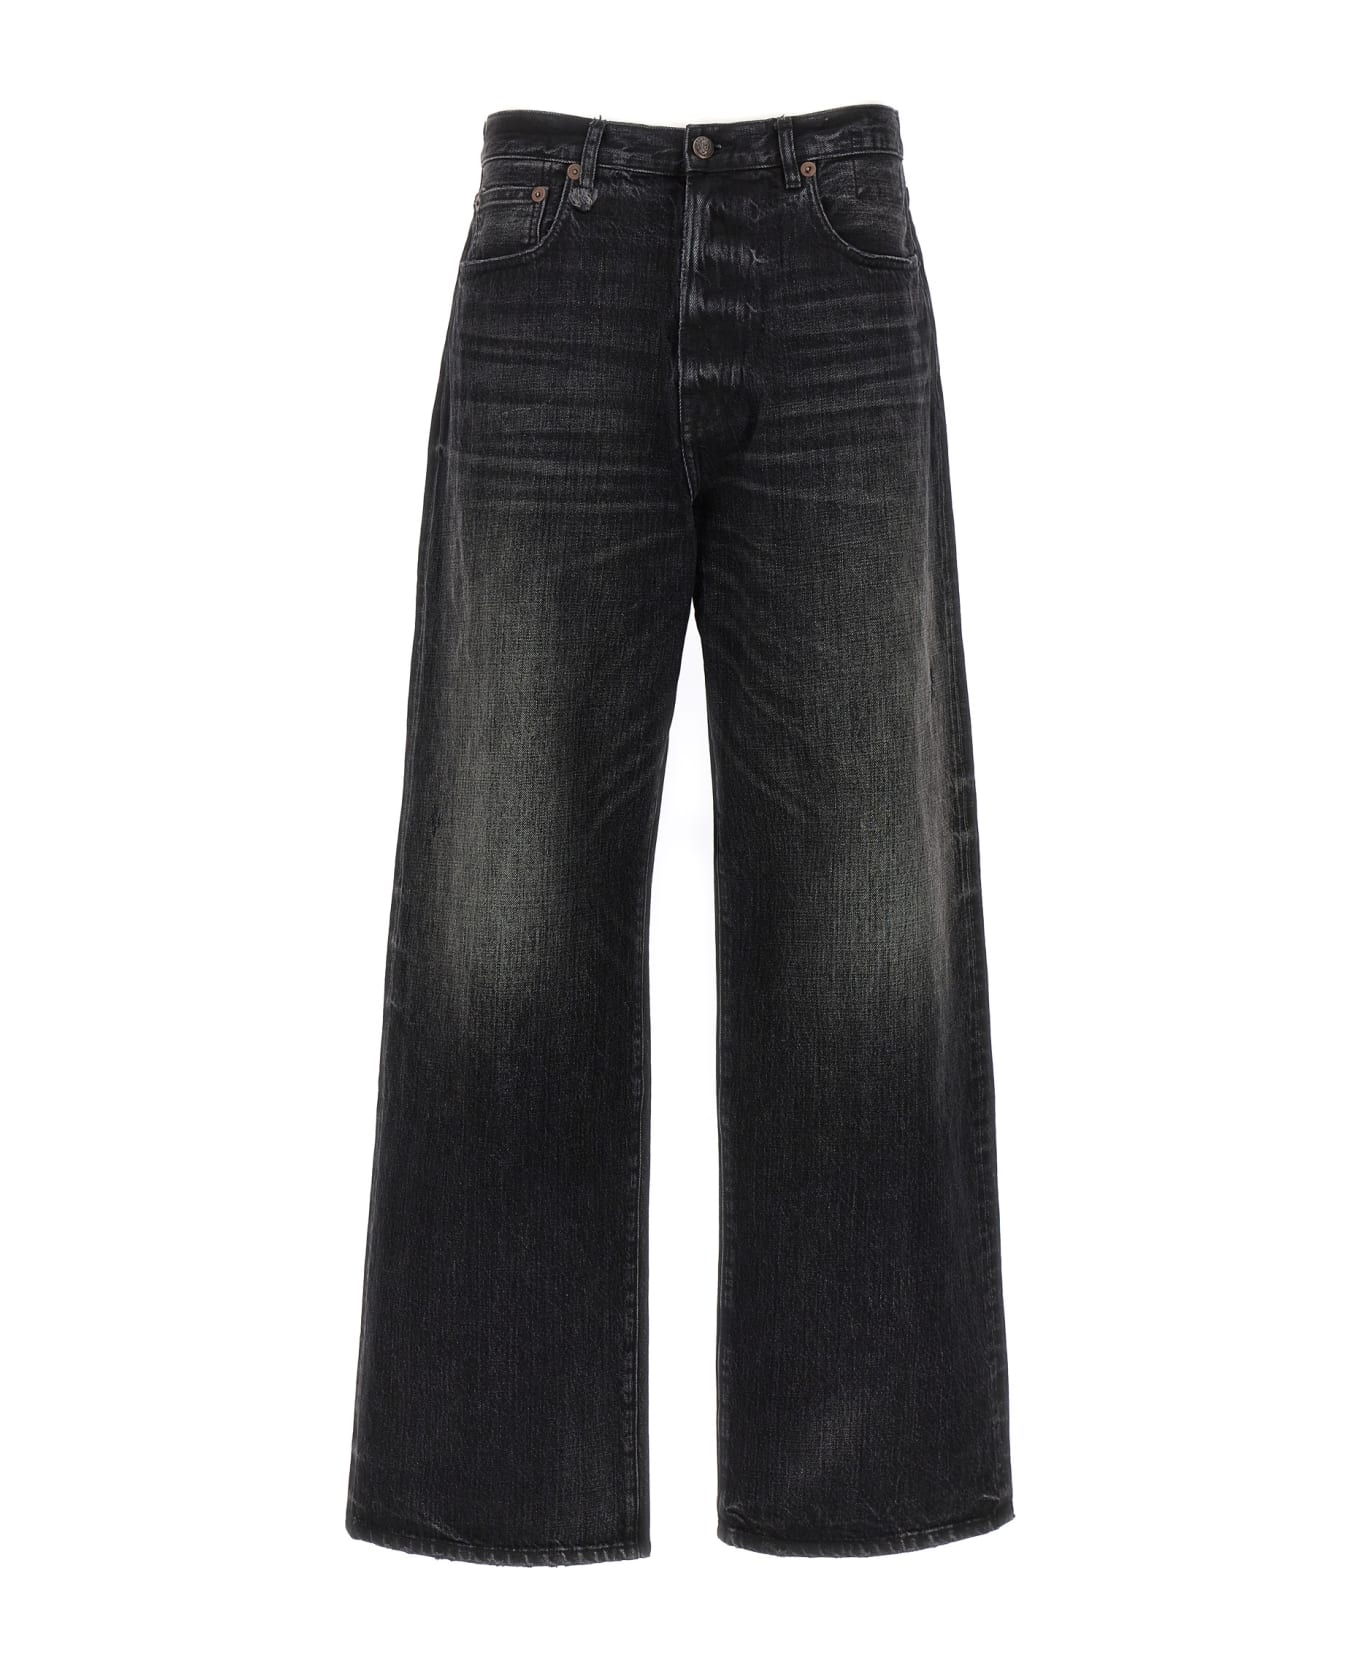 R13 'd'arcy' Jeans - Black  